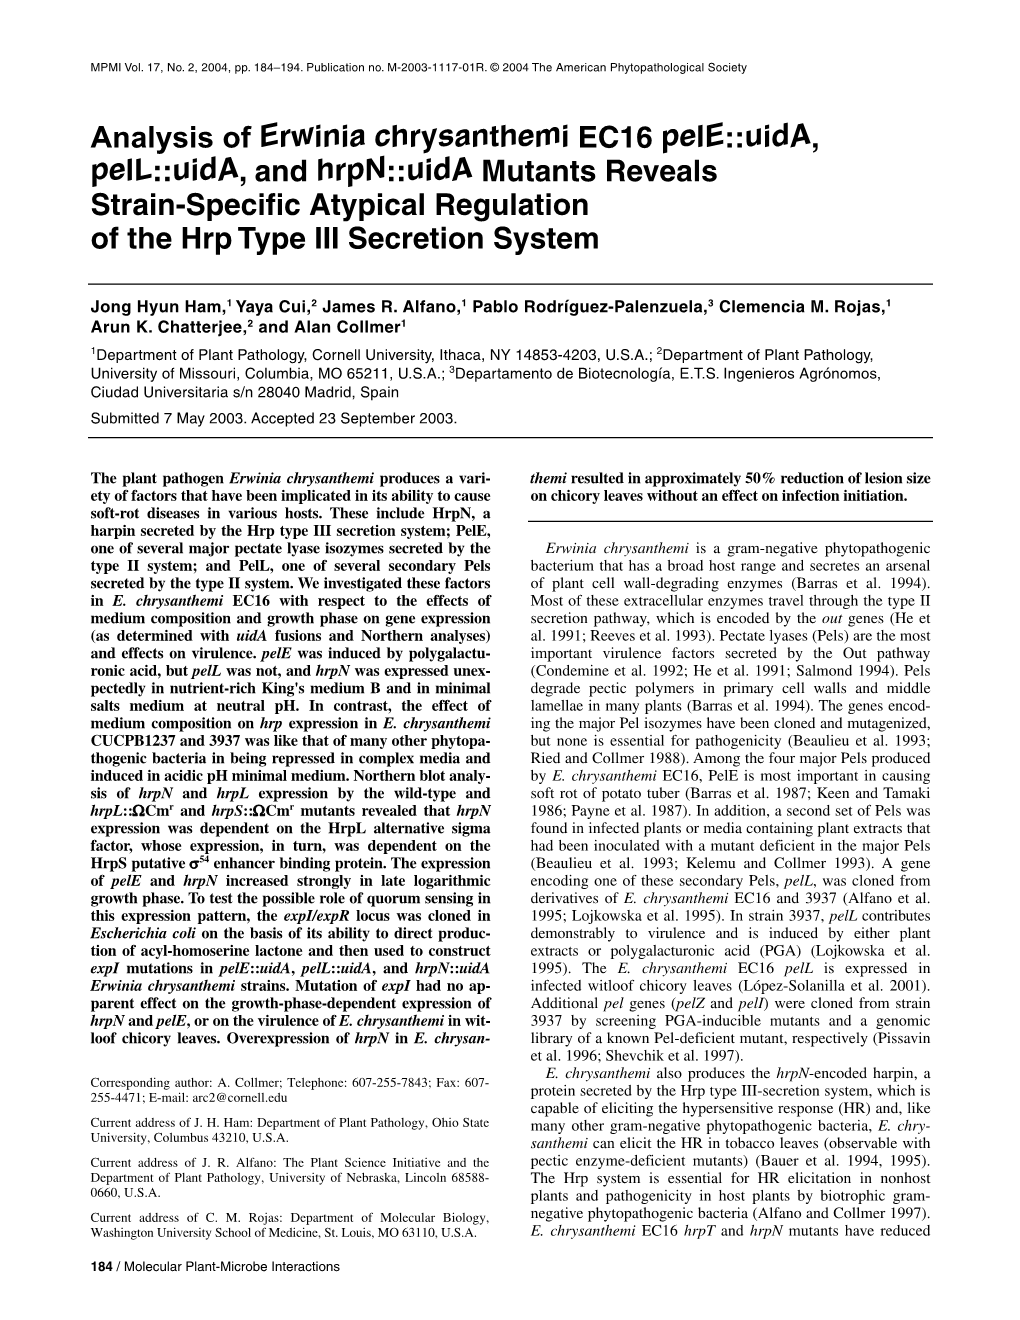 Analysis of Erwinia Chrysanthemi EC16 Pele::Uida, Pell::Uida, and Hrpn::Uida Mutants Reveals Strain-Specific Atypical Regulation of the Hrp Type III Secretion System